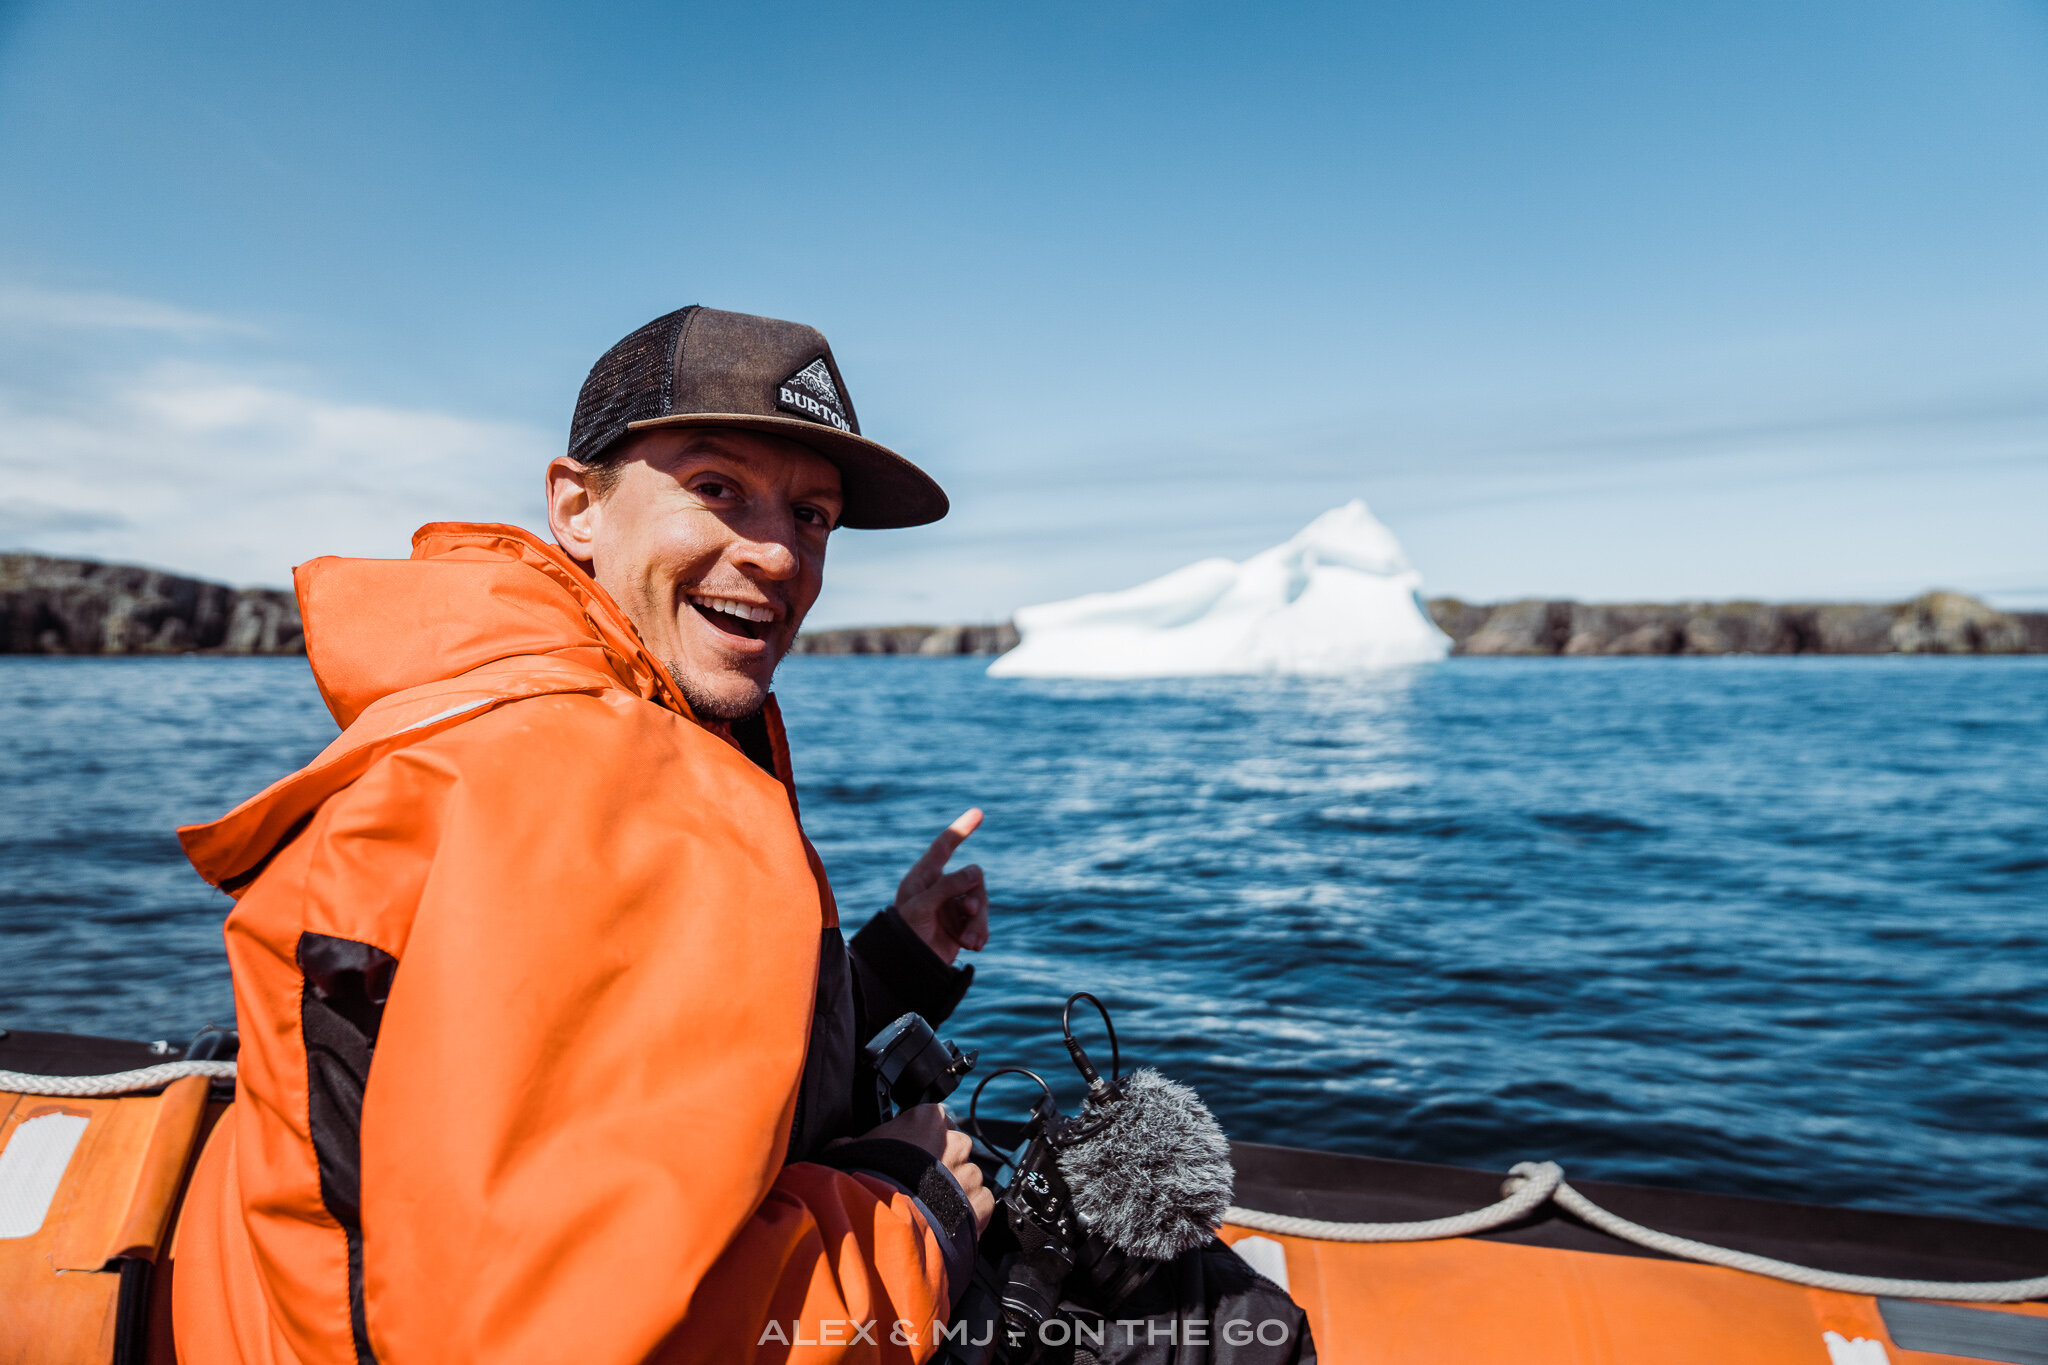 Alex-MJ-On-the-GO-Iceberg-Discovery-Sea-Adventure-Tours-Iceberget Alex.jpg